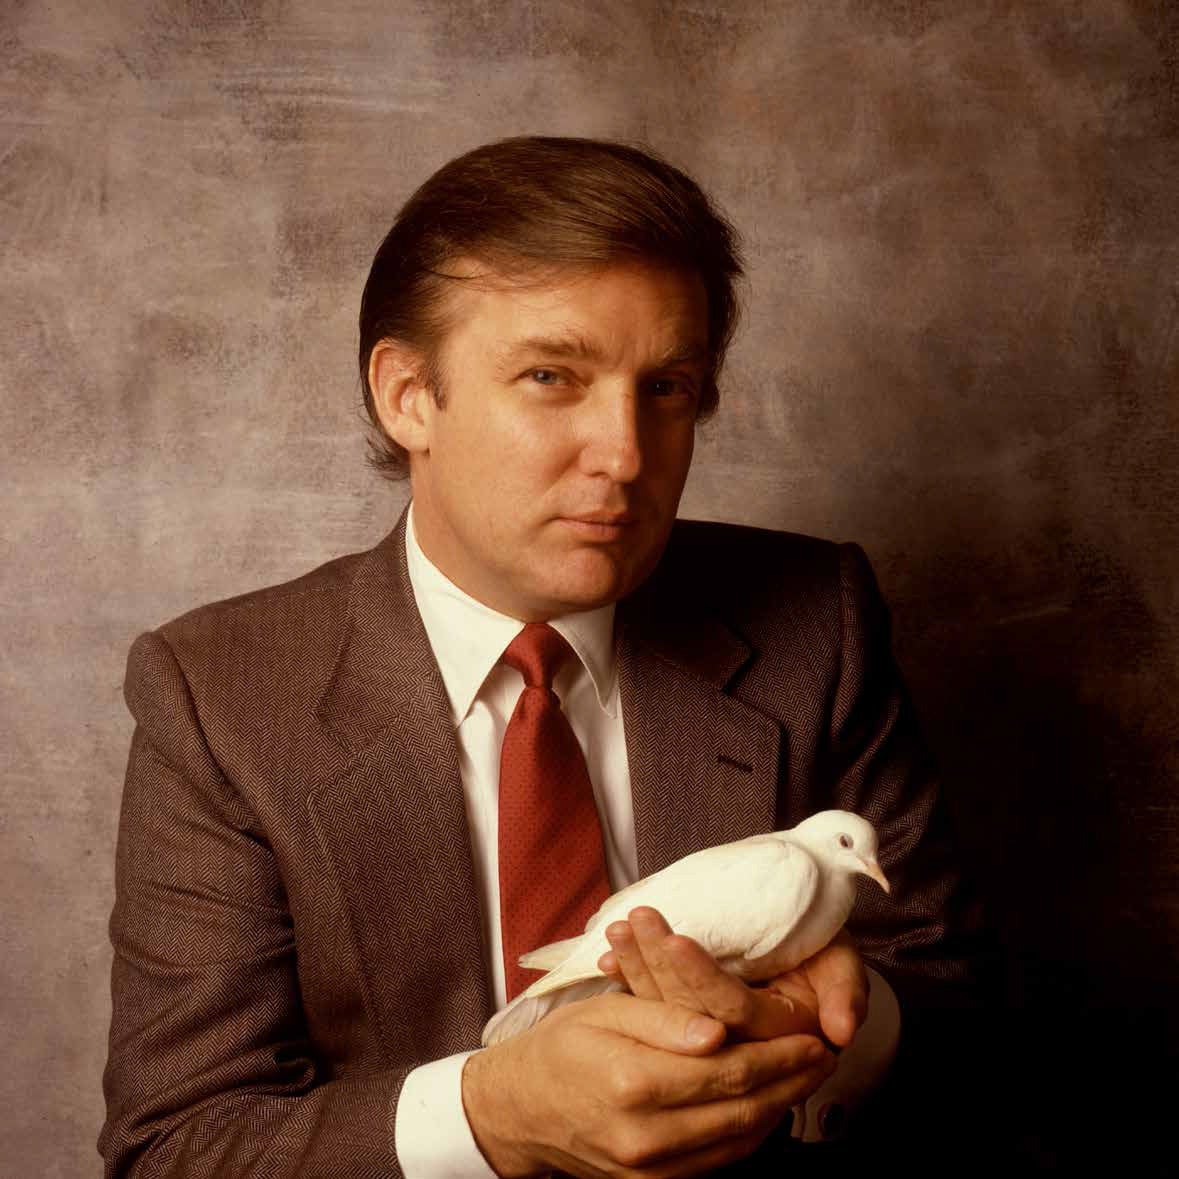 William Coupon Portrait Photograph - Donald Trump, Dove of Peace